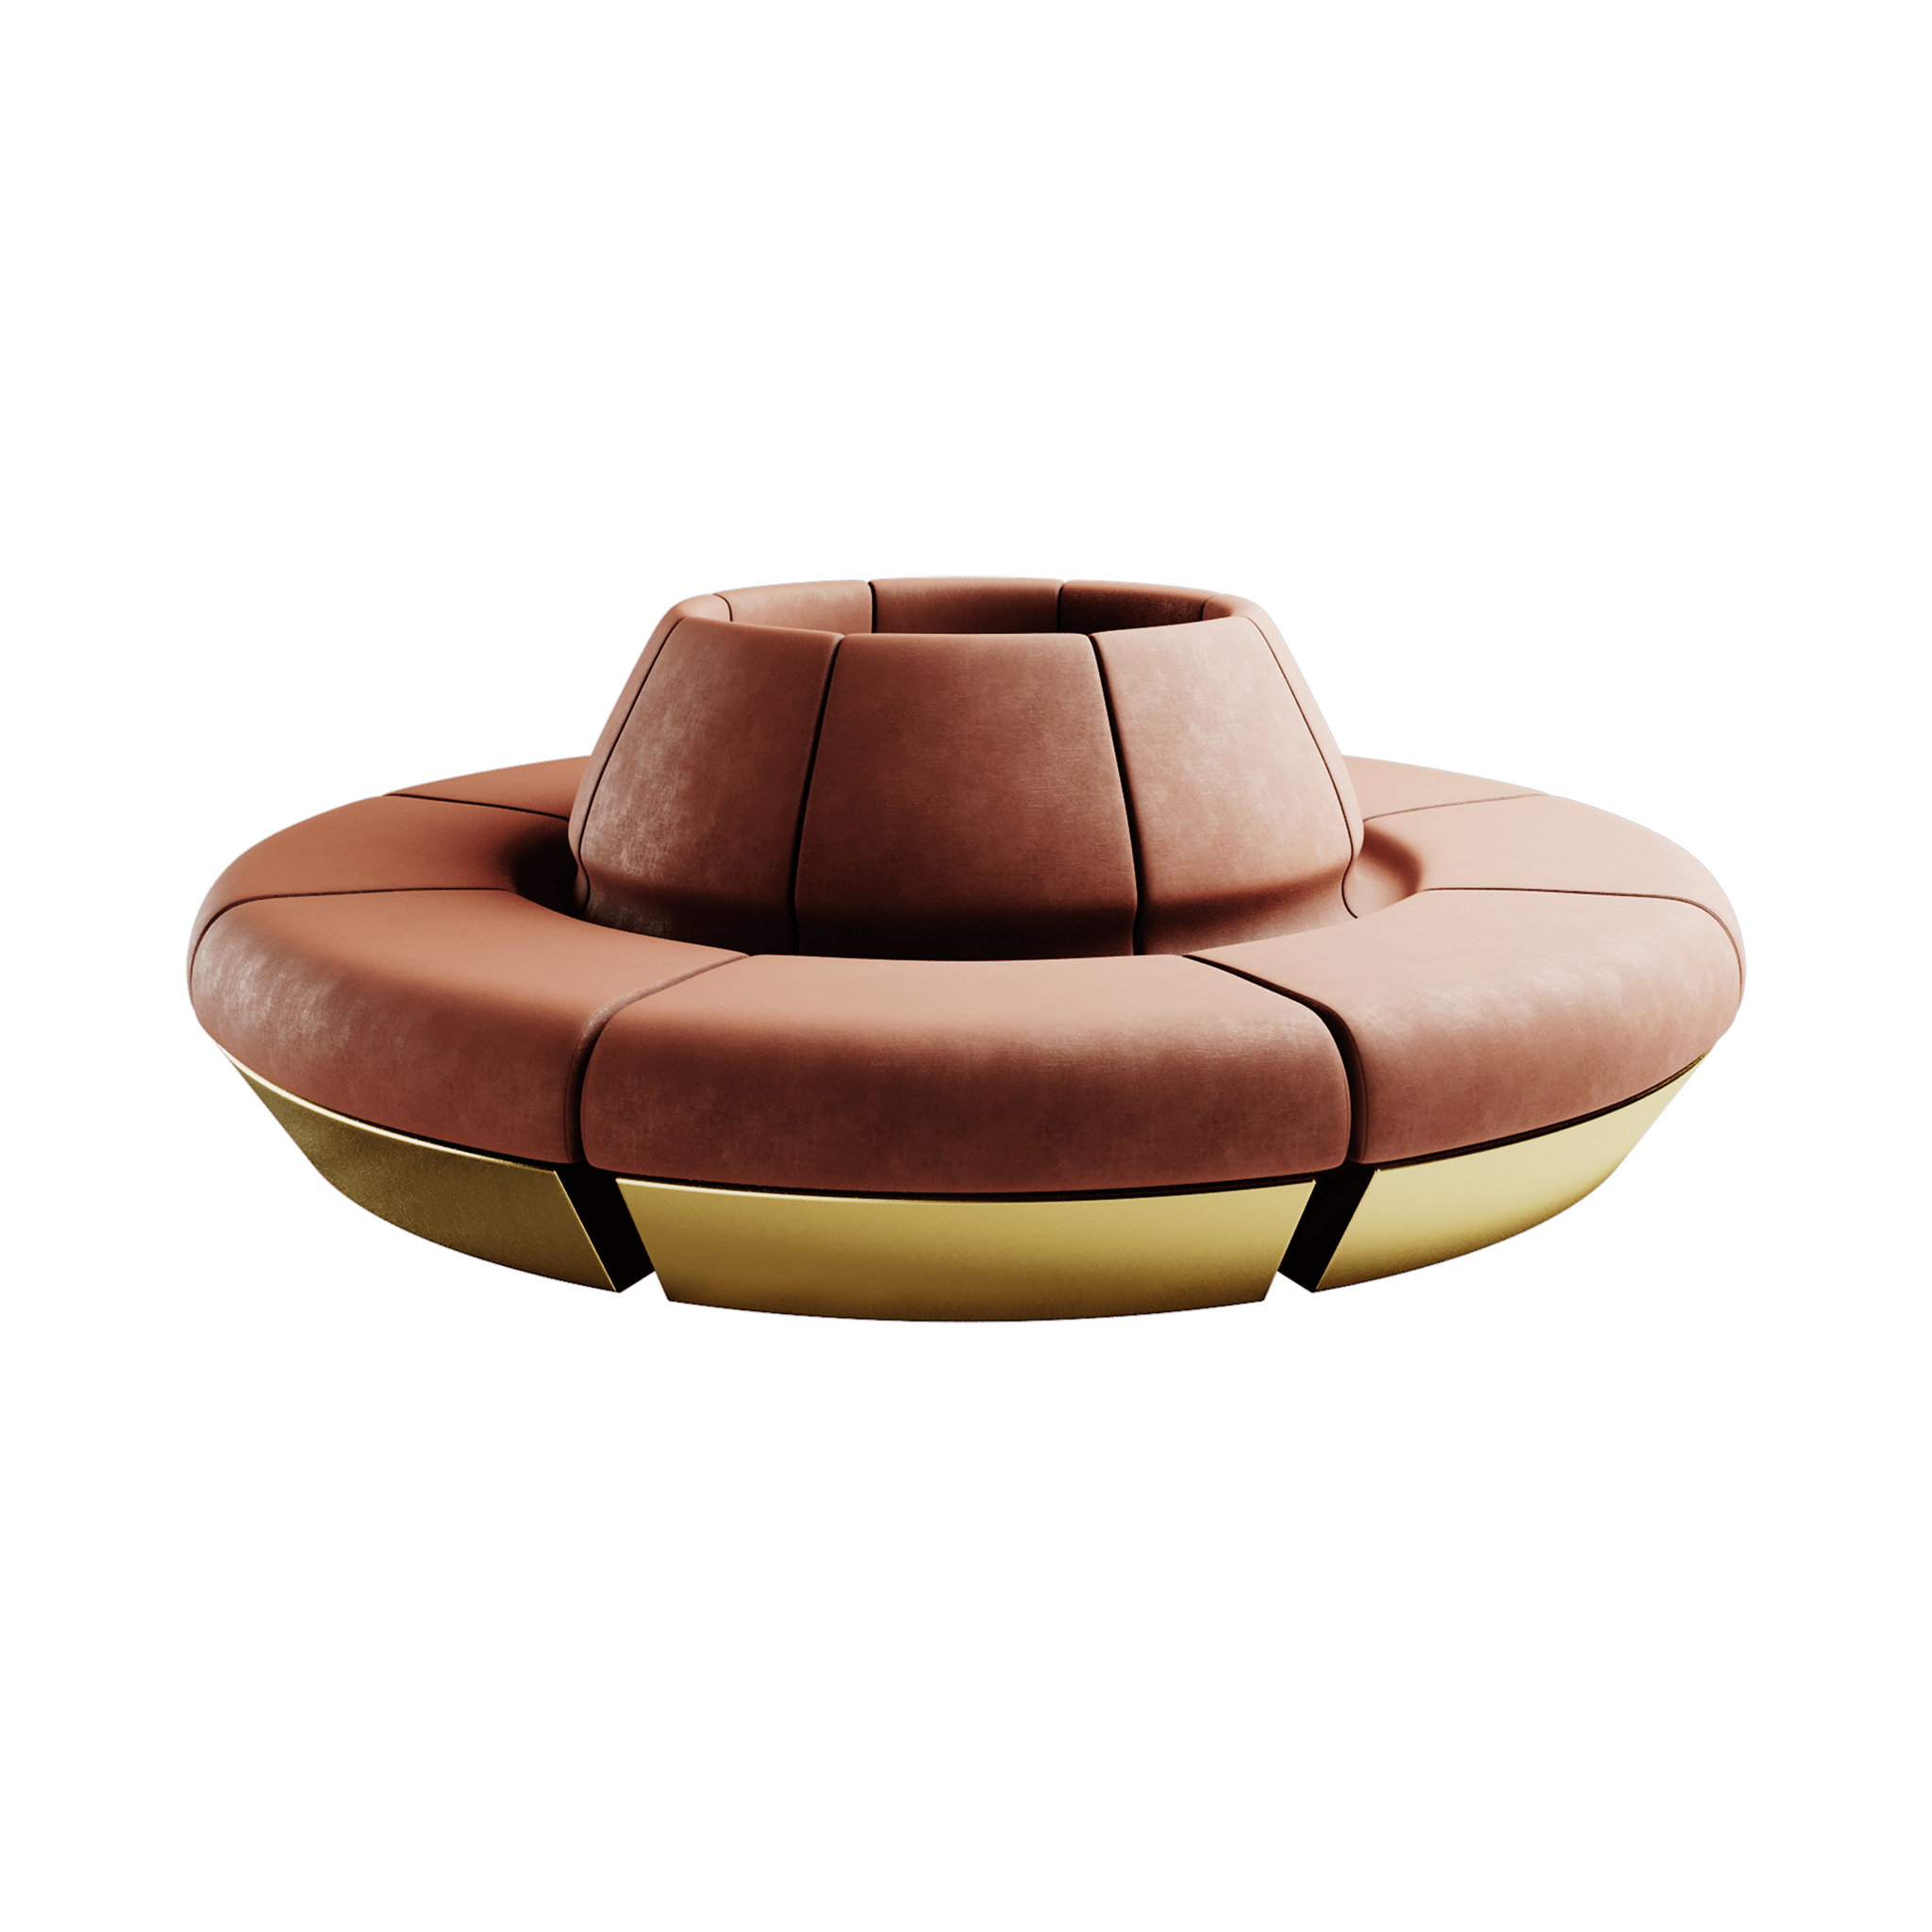 Gyvaté Round Sofa by Hommés Studio